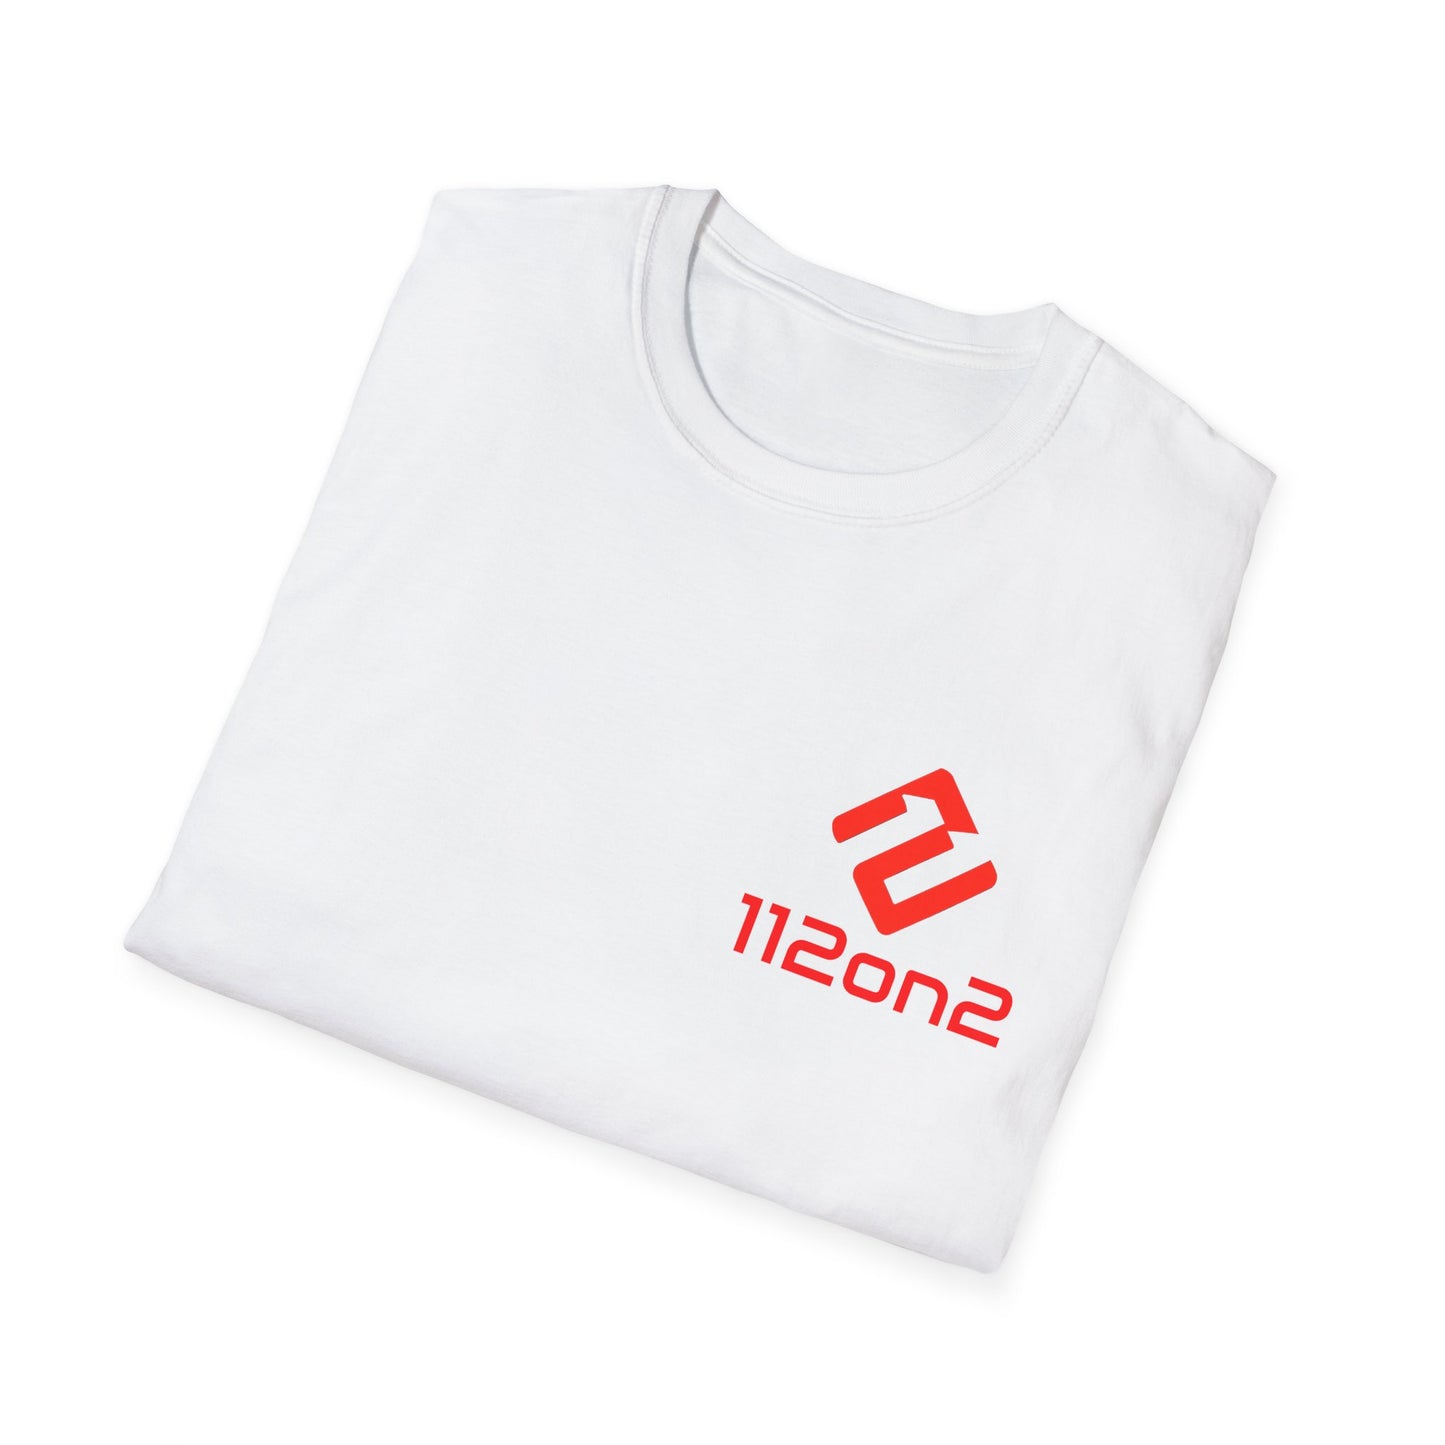 112on2 Logo T-Shirt